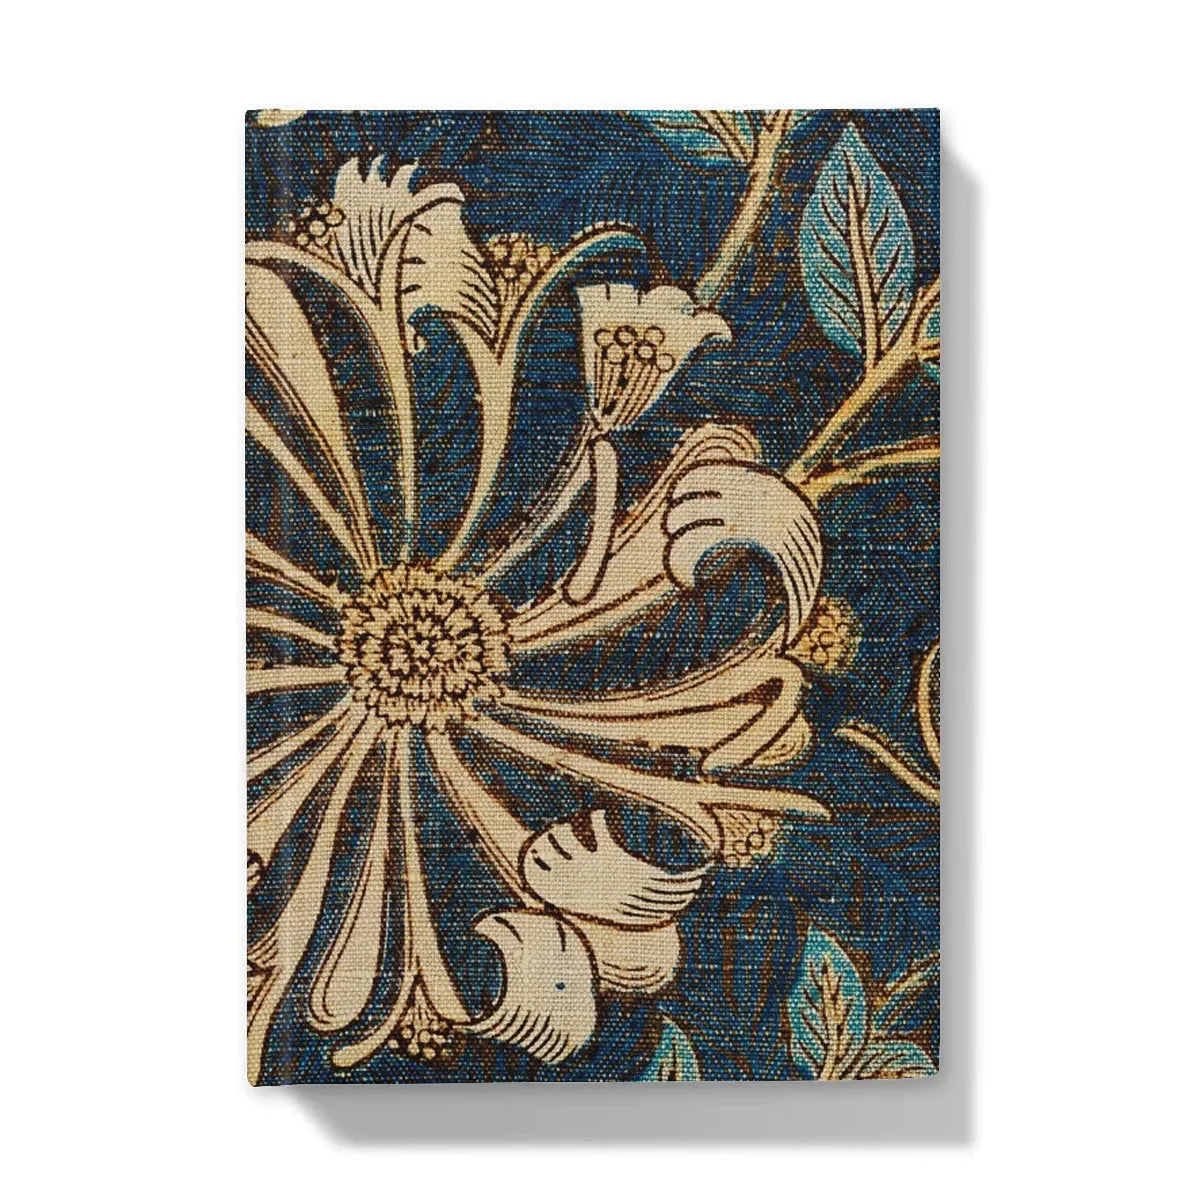 Honeysuckle 3 By William Morris Hardback Journal - 5’x7’ / 5’ x 7’ - Lined Paper - Notebooks & Notepads - Aesthetic Art